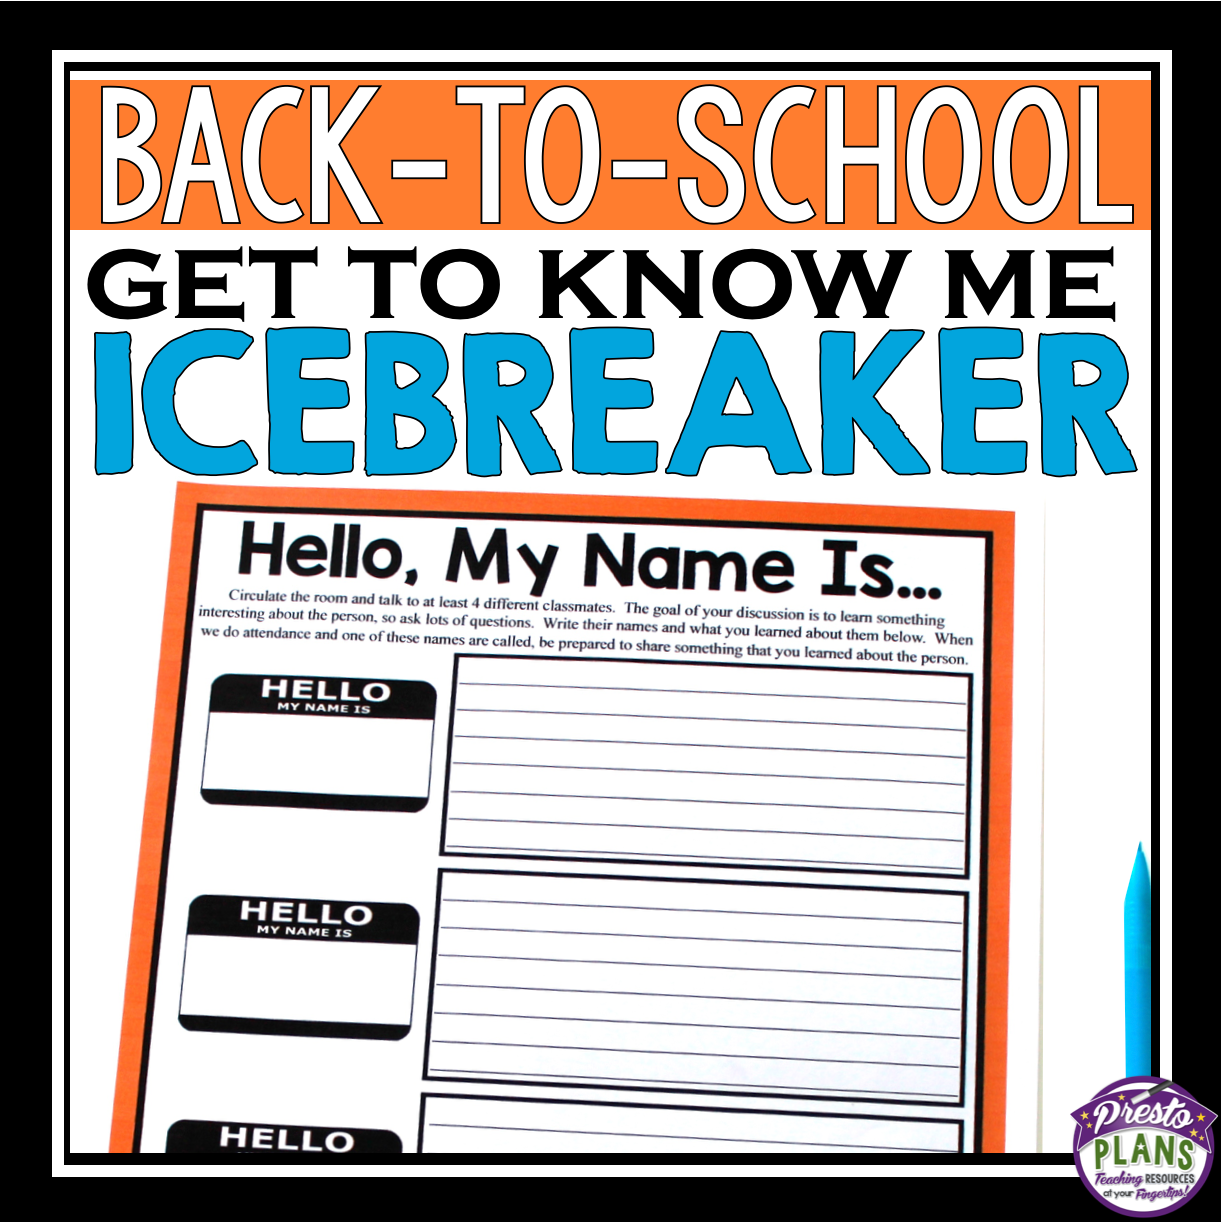 BACK TO SCHOOL ACTIVITY: INTRODUCTIONS ICEBREAKER – Presto Plans